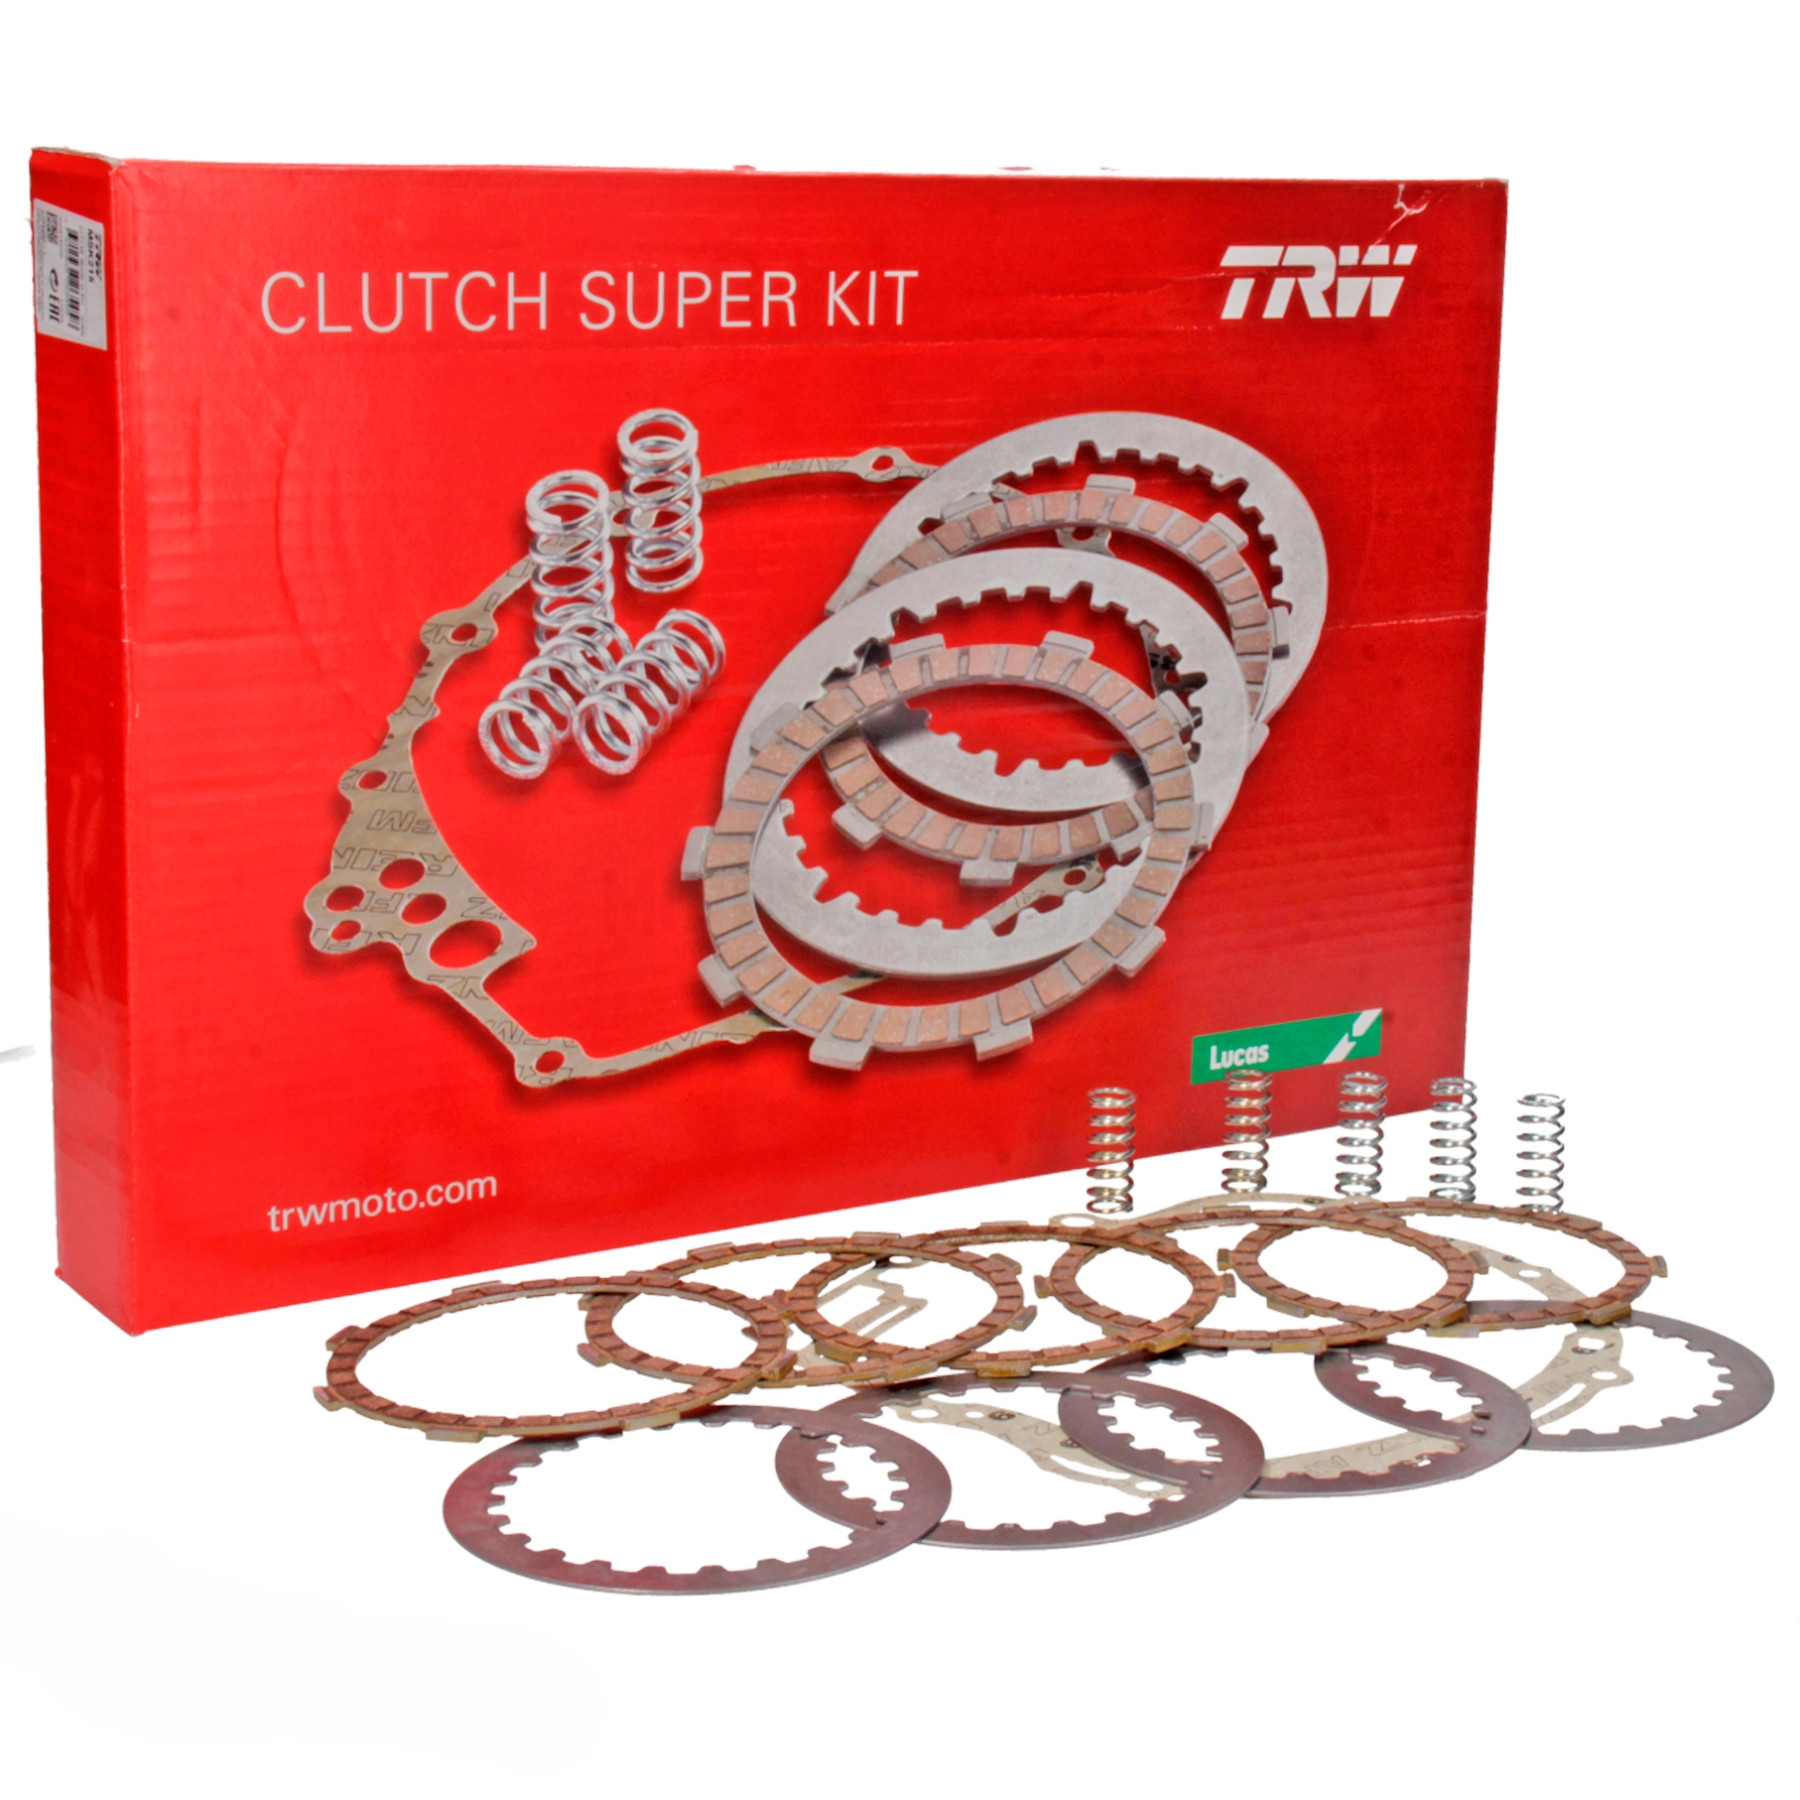 Clutch discs, washers and springs Yamaha TT/XT 125cc TRW Sku:MSK215 /m/s/msk215.jpg